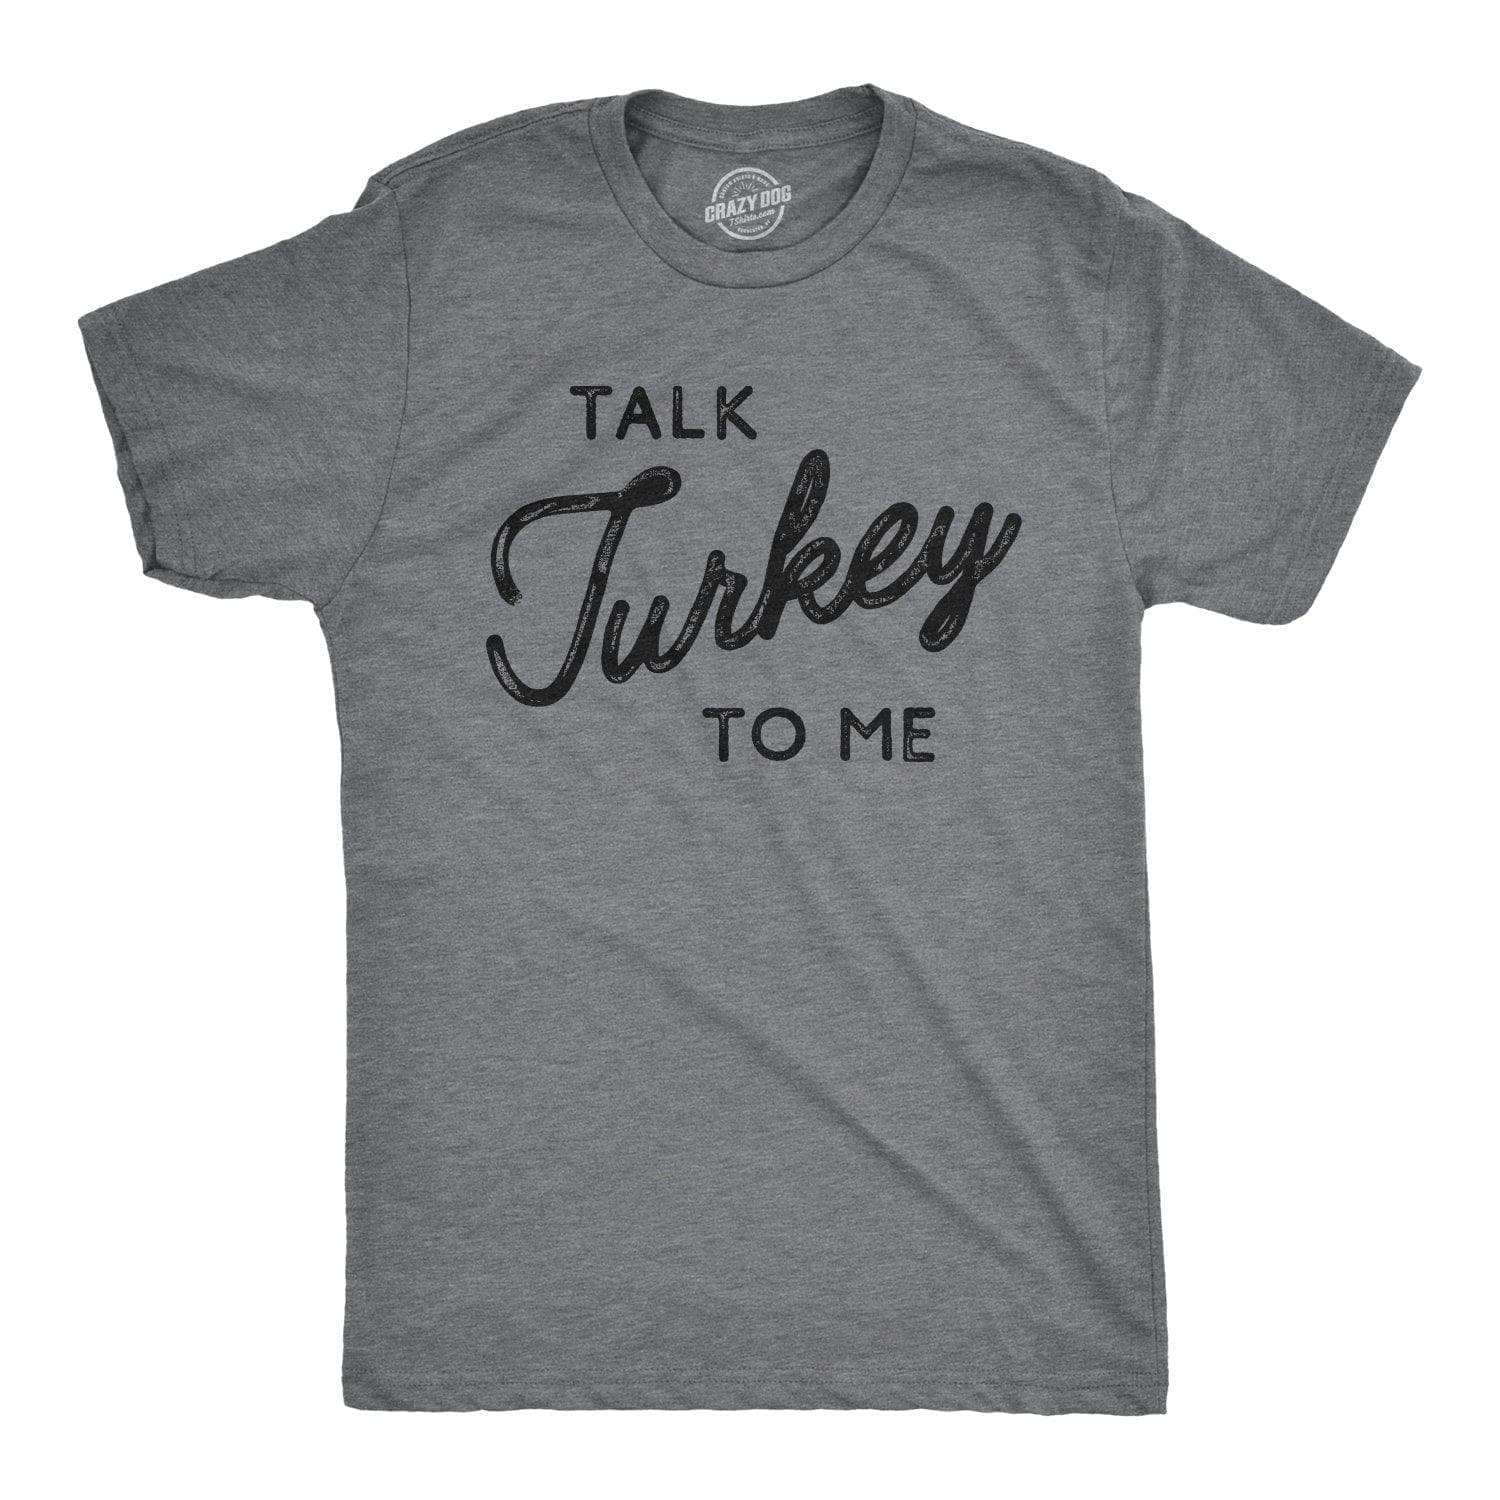 Talk Turkey To Me Men's Tshirt - Crazy Dog T-Shirts